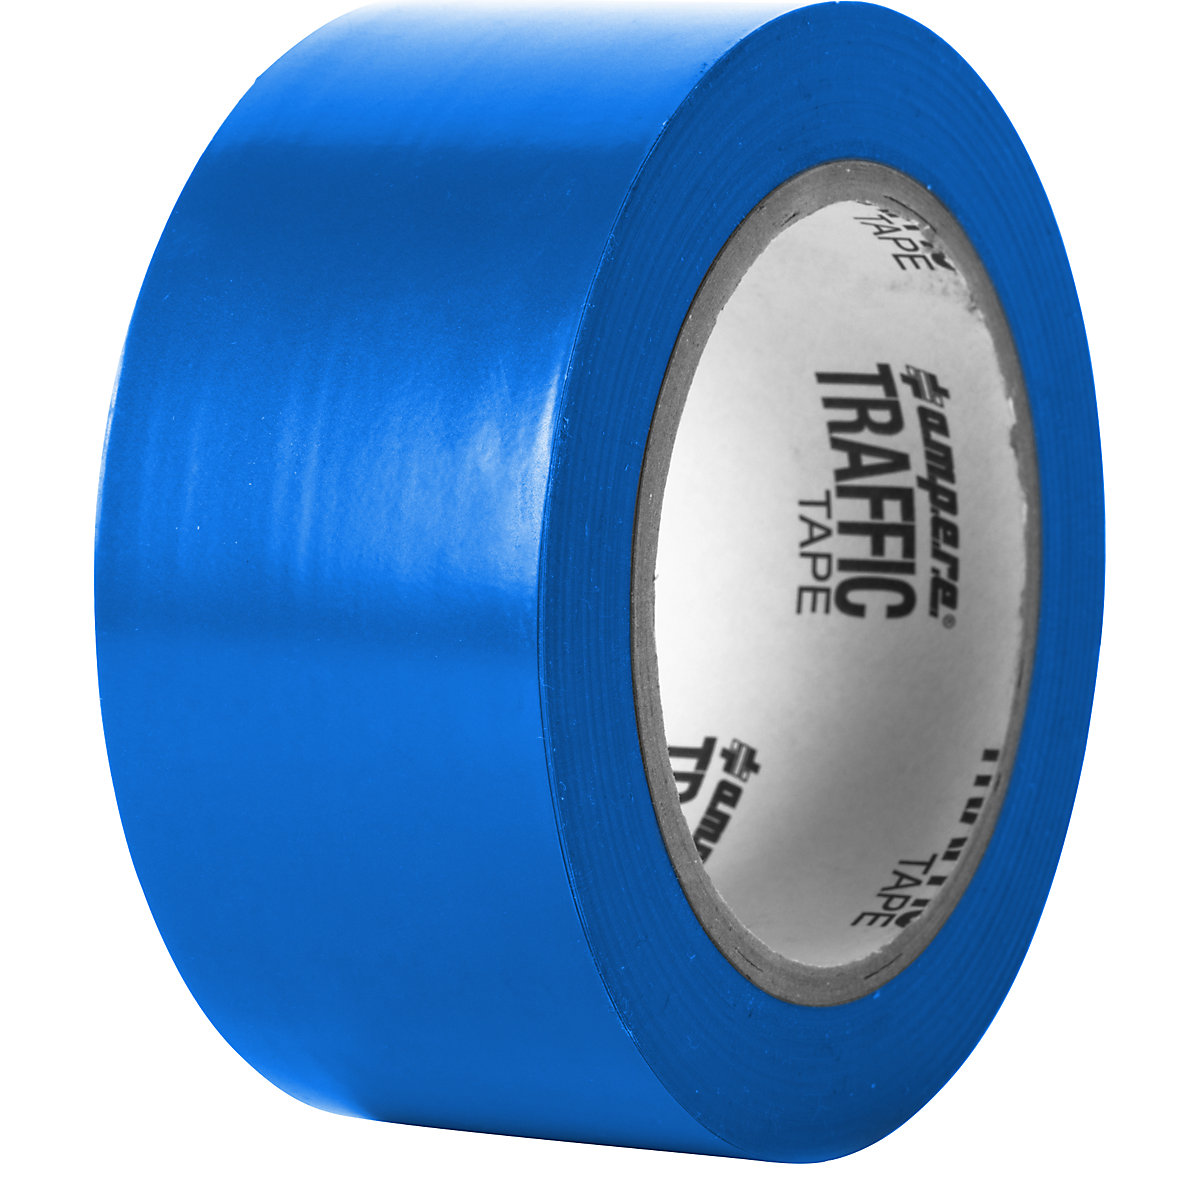 Vloermarkeringstape – Ampere, breedte 50 mm, blauw-2